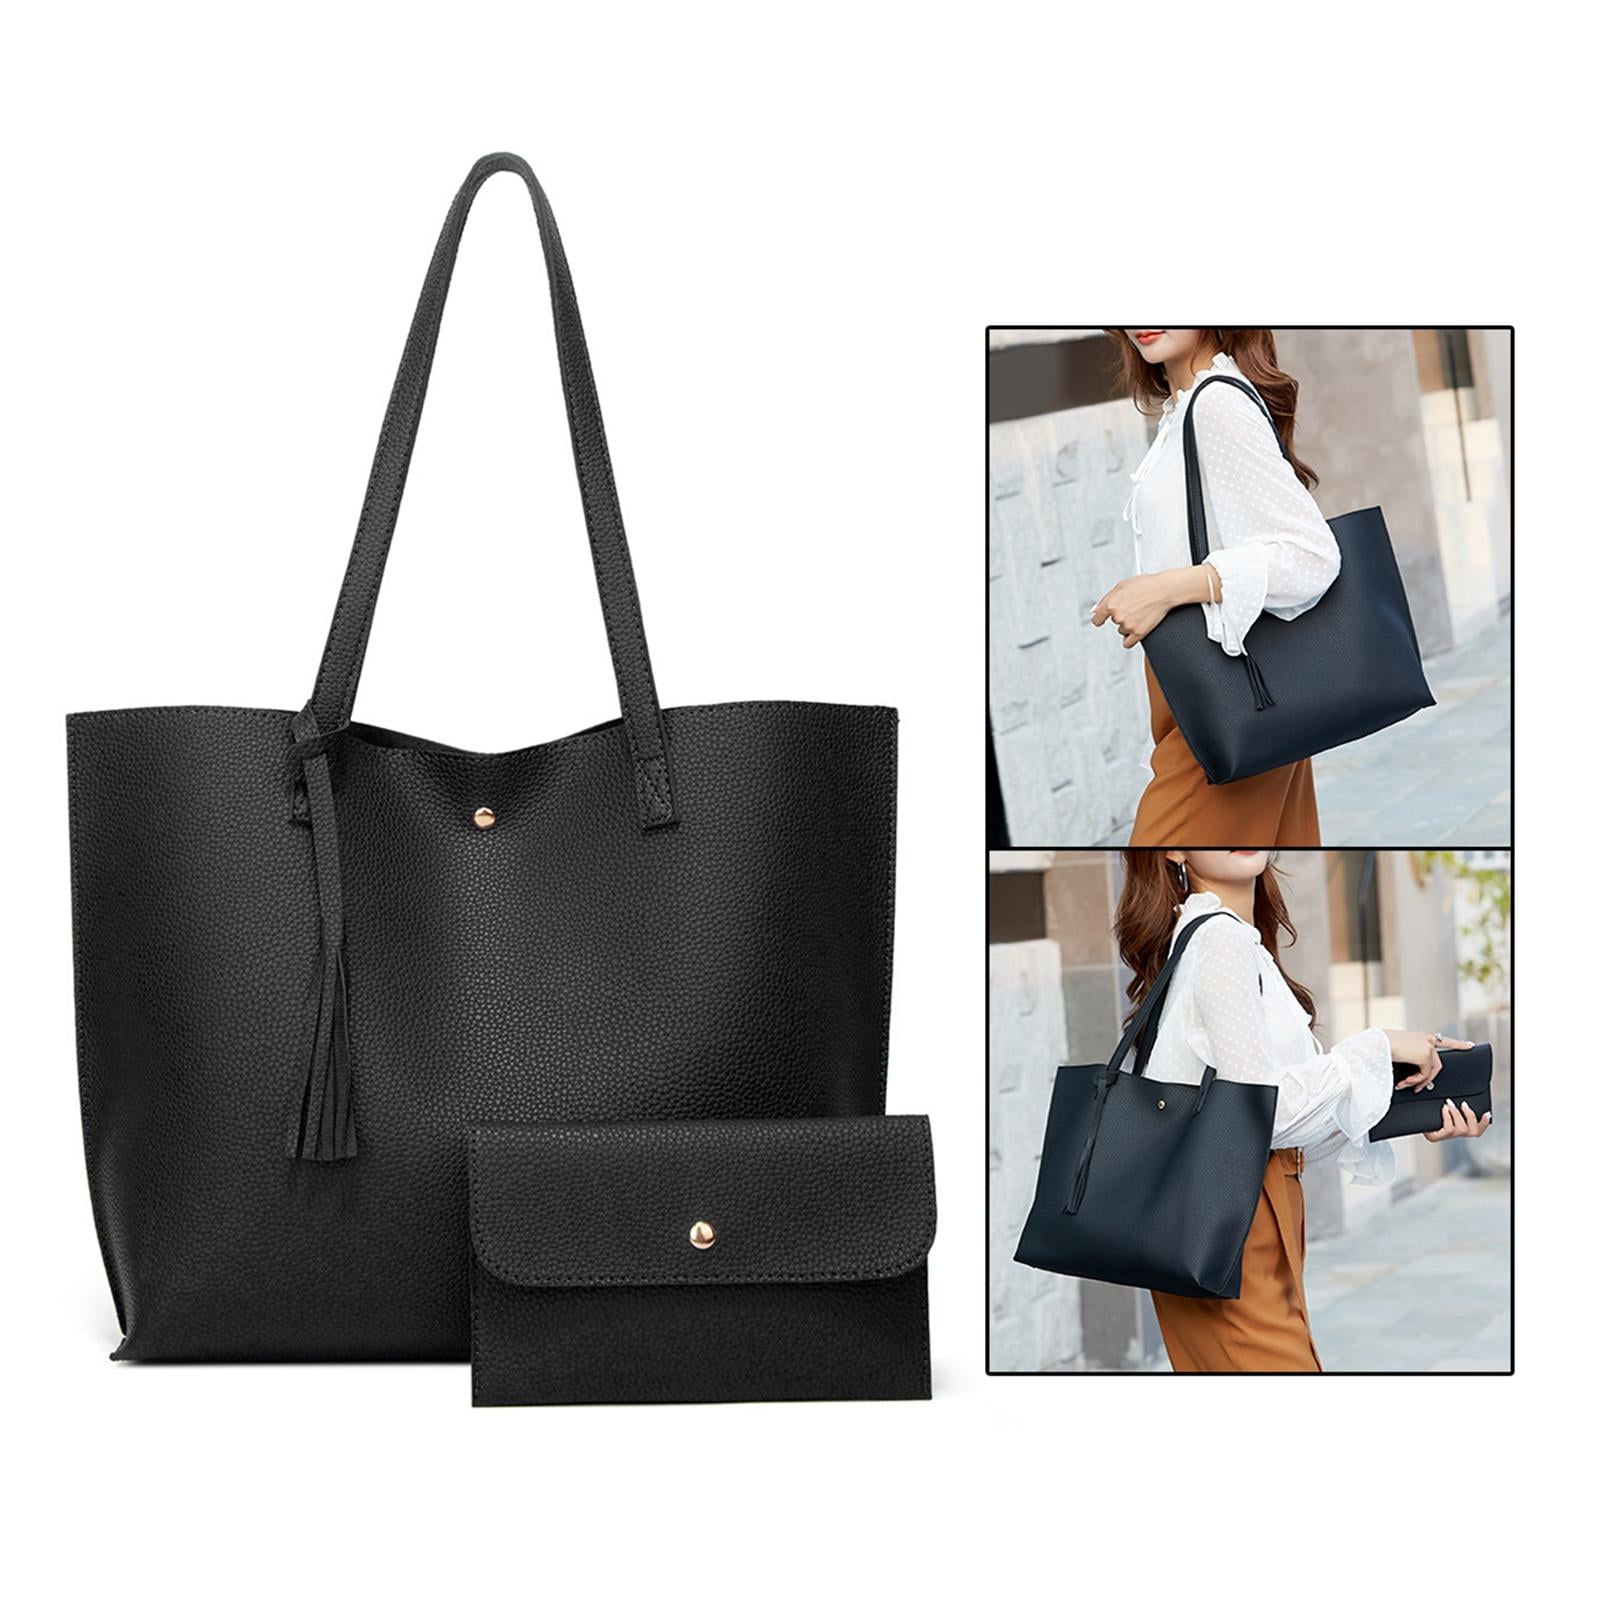 No Boundaries Women's Bar Bag Crossbody with Two Straps Black - Walmart.com  | Fashion bags, Bags, Womens crossbody bag